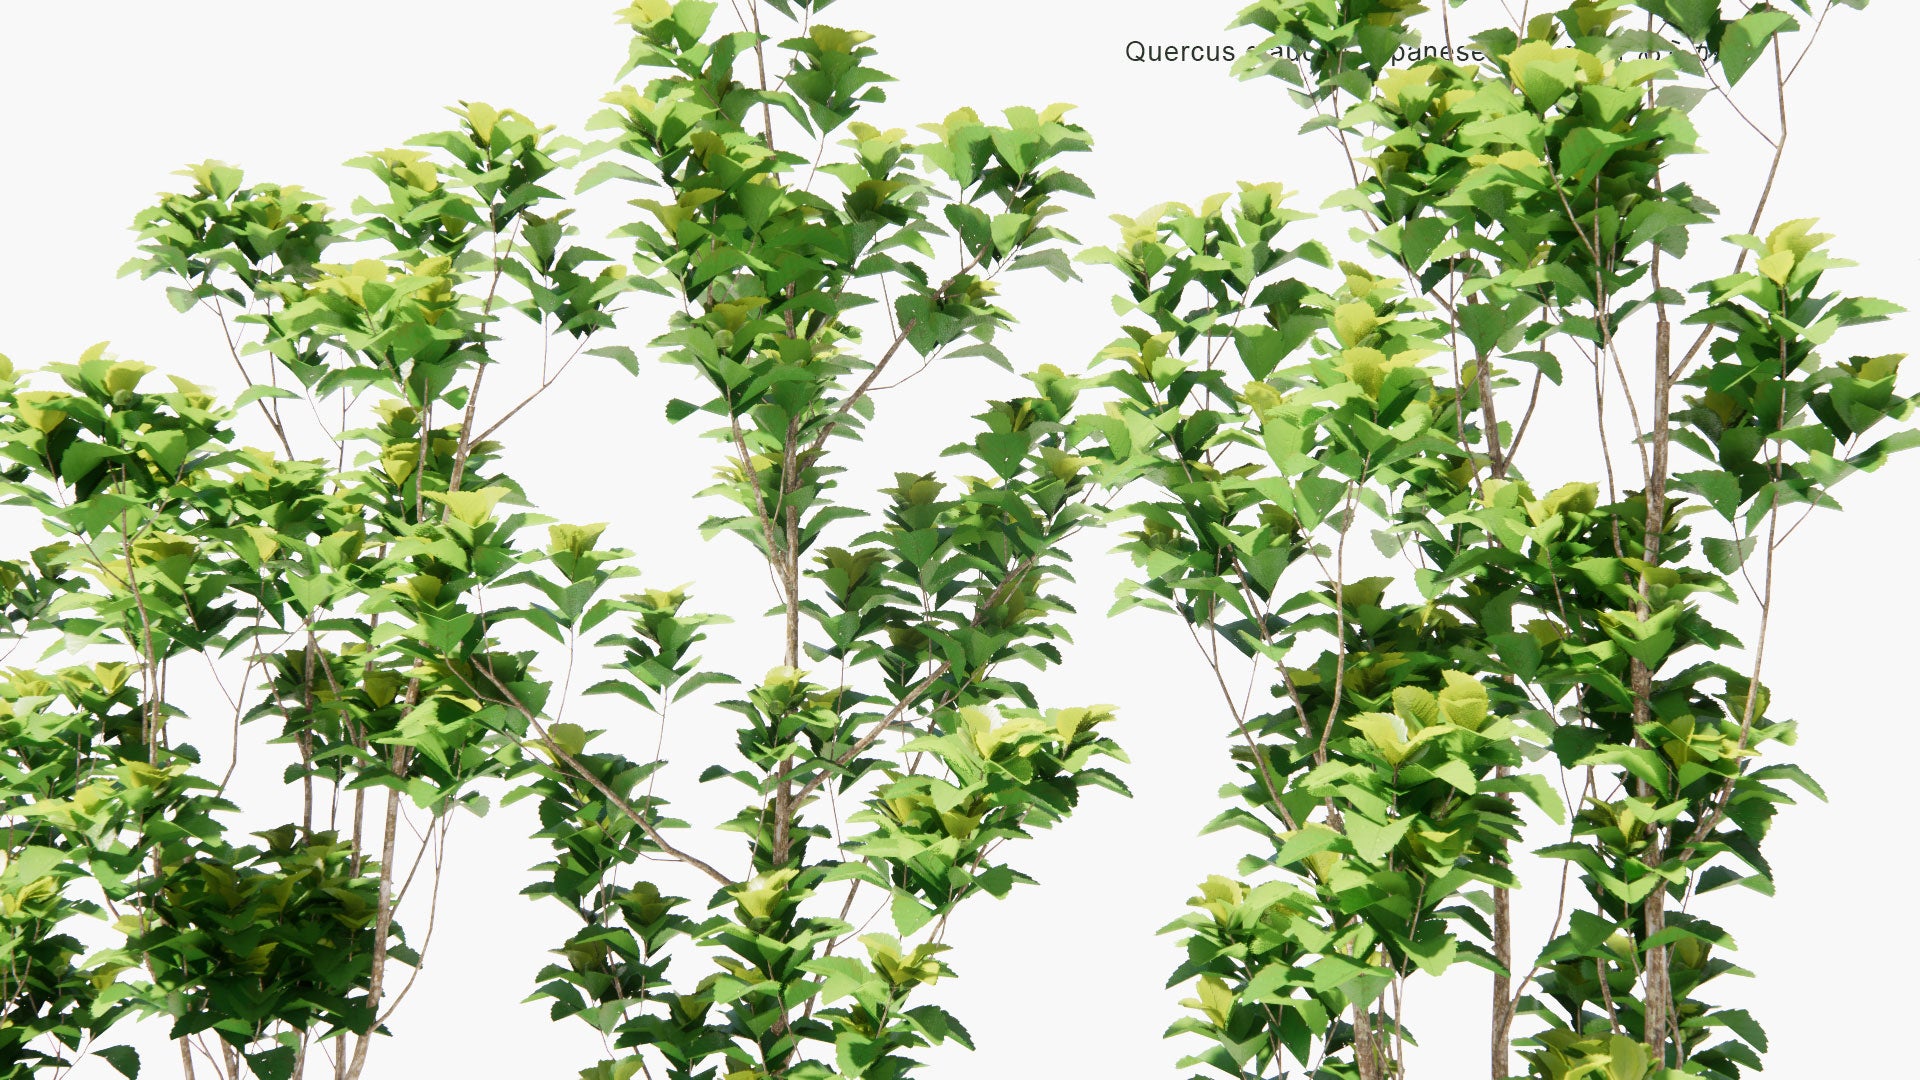 Low Poly Quercus Glauca - Japanese Blue Oak, あらかし (3D Model)